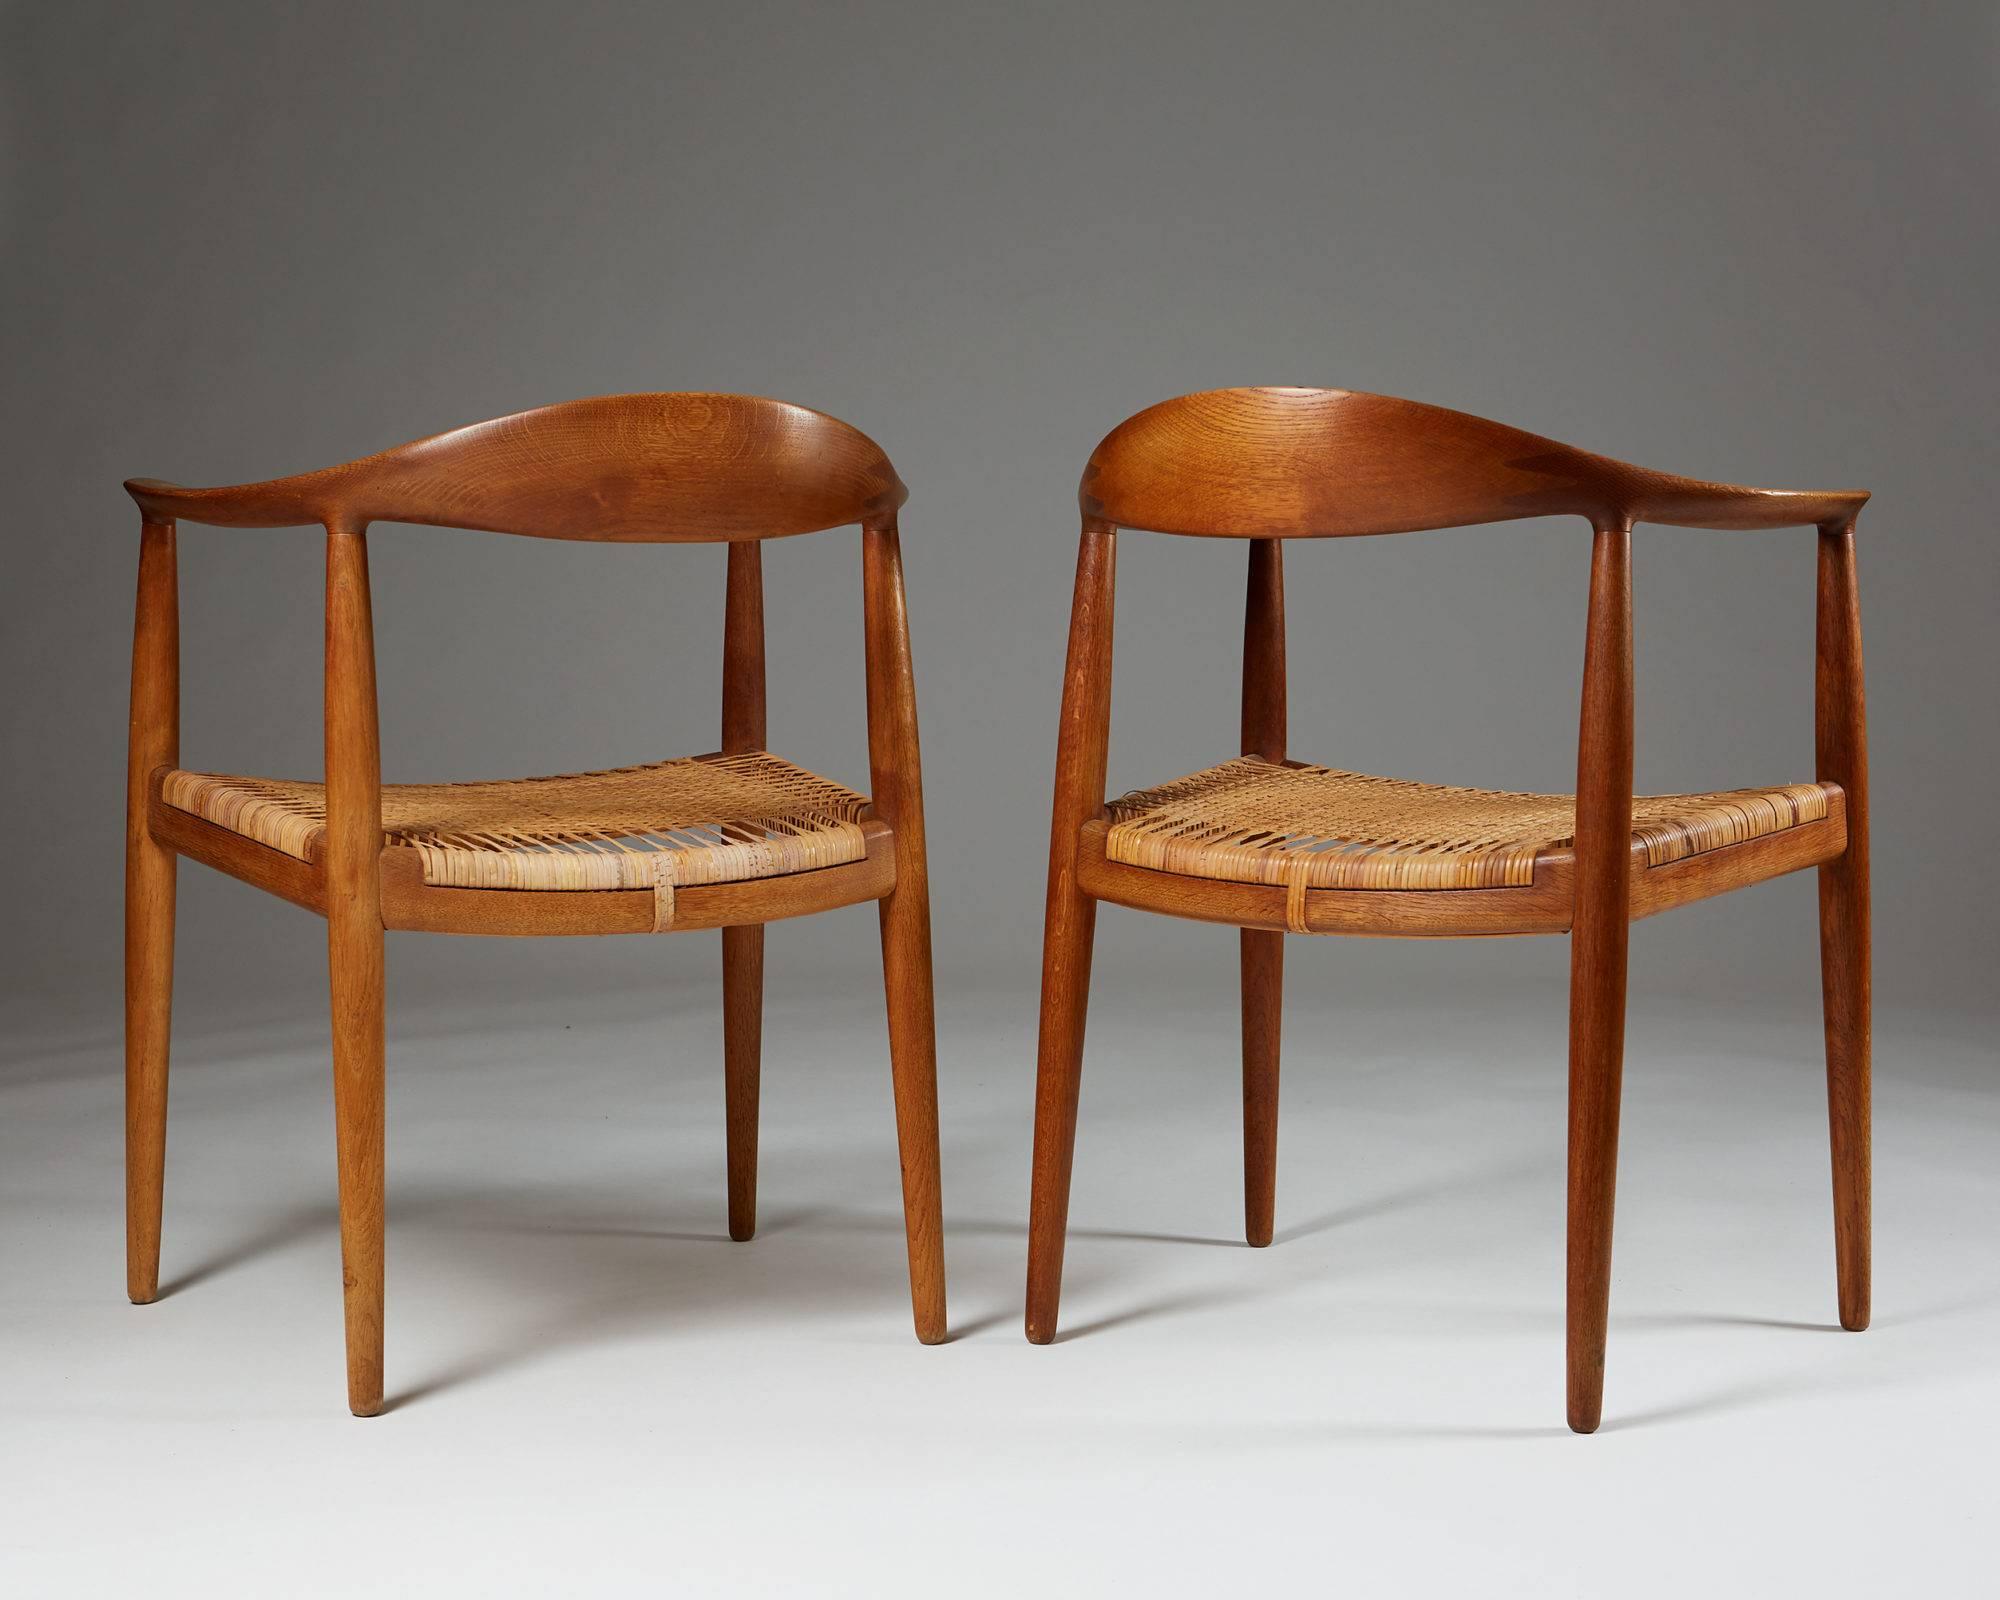 Danish Pair of Armchairs “The Chair” Designed by Hans J. Wegner, Denmark, 1949